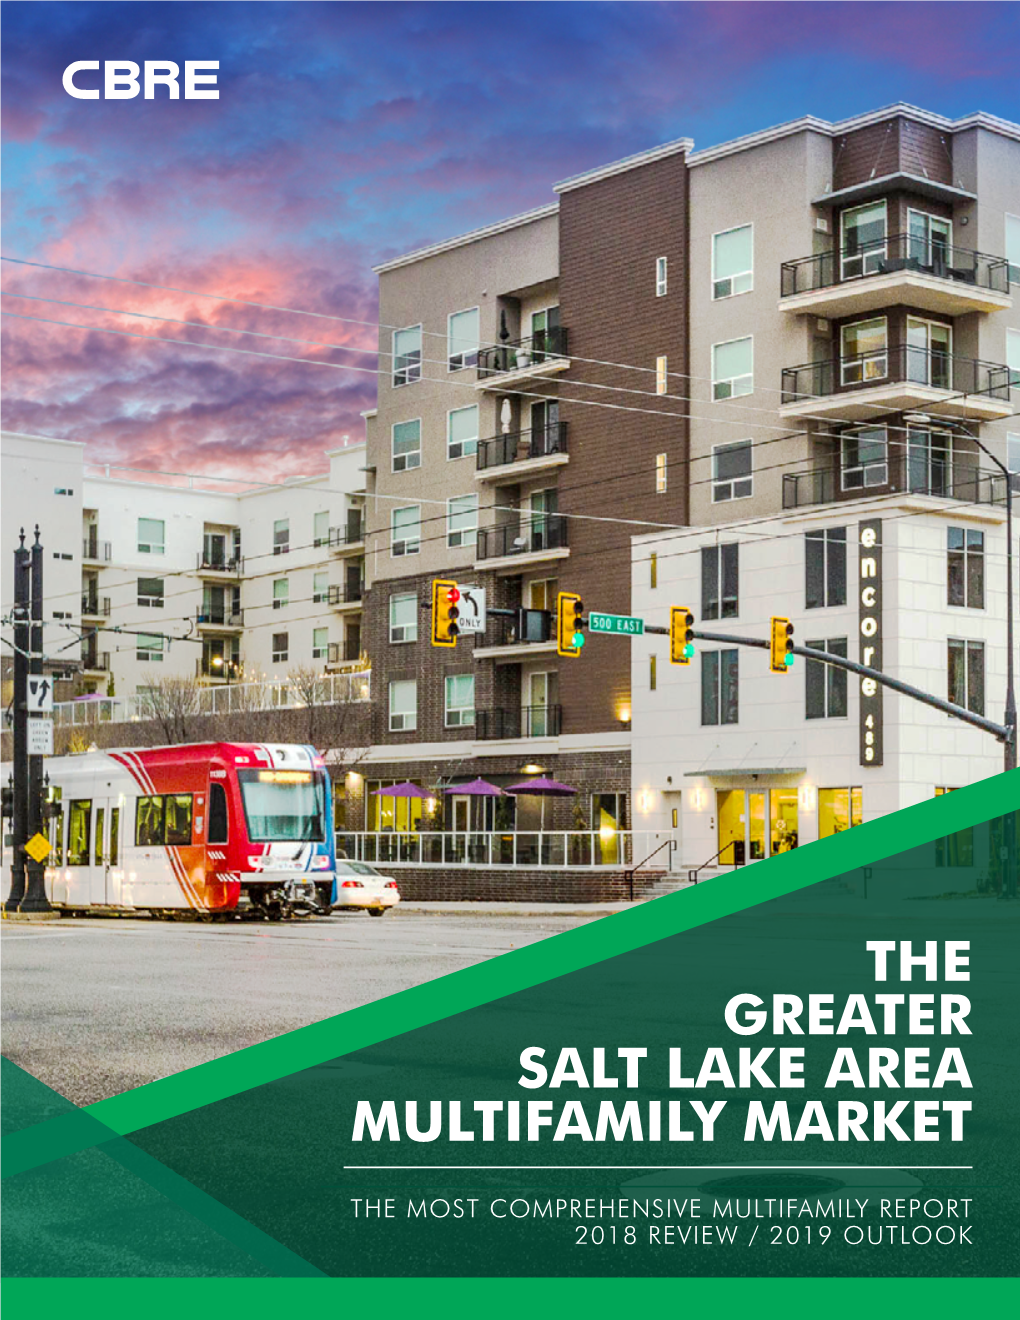 The Greater Salt Lake Area Multifamily Market